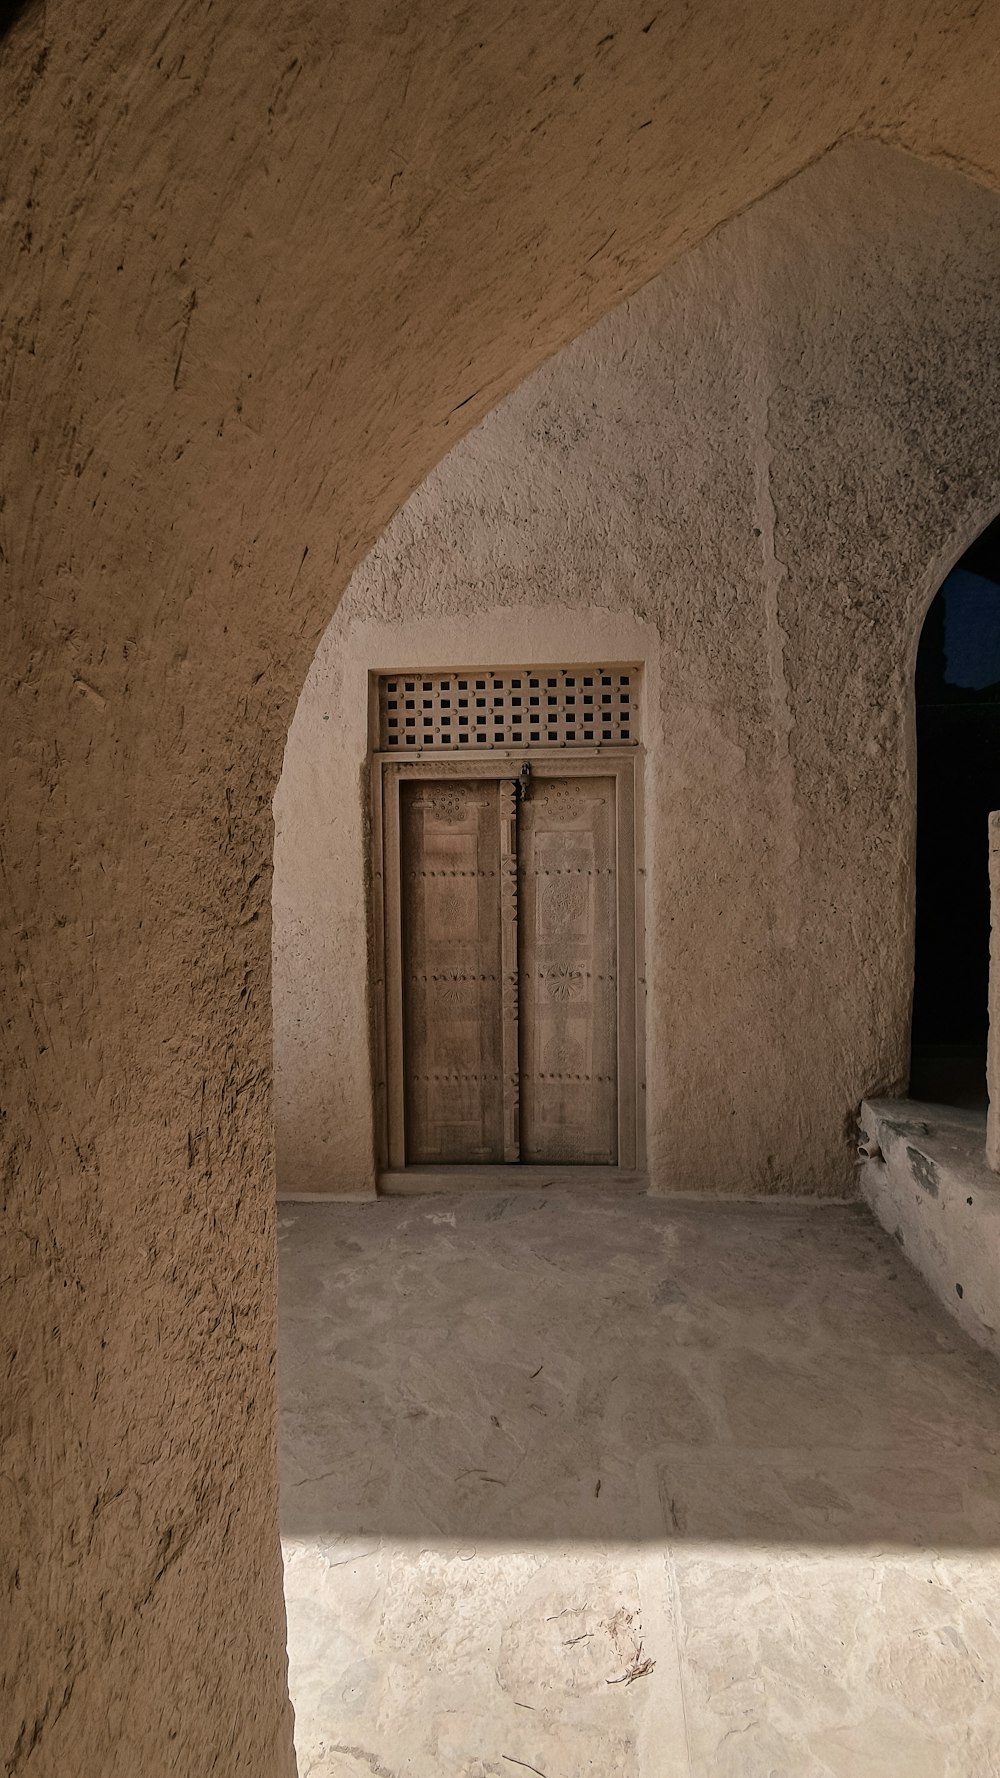 a doorway in a stone building with a wooden door